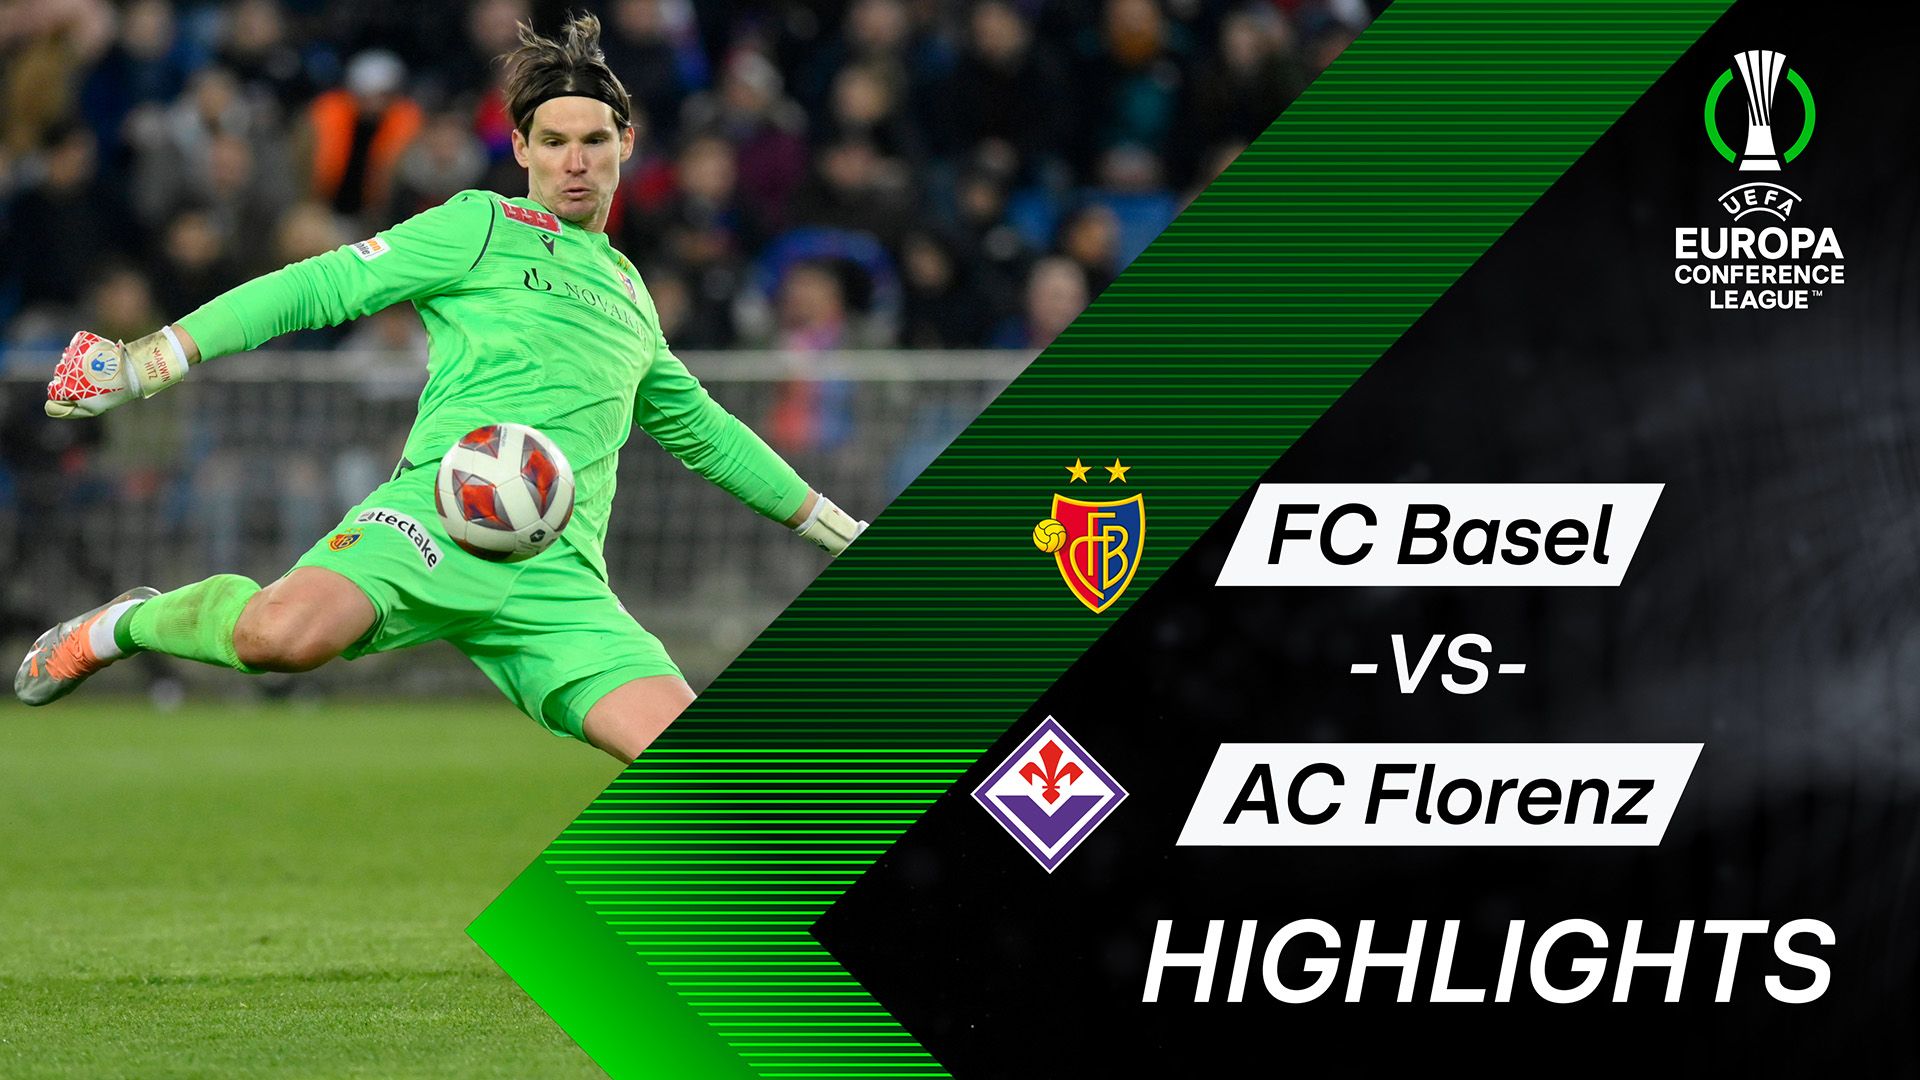 Highlights: FC Basel vs. AC Florenz